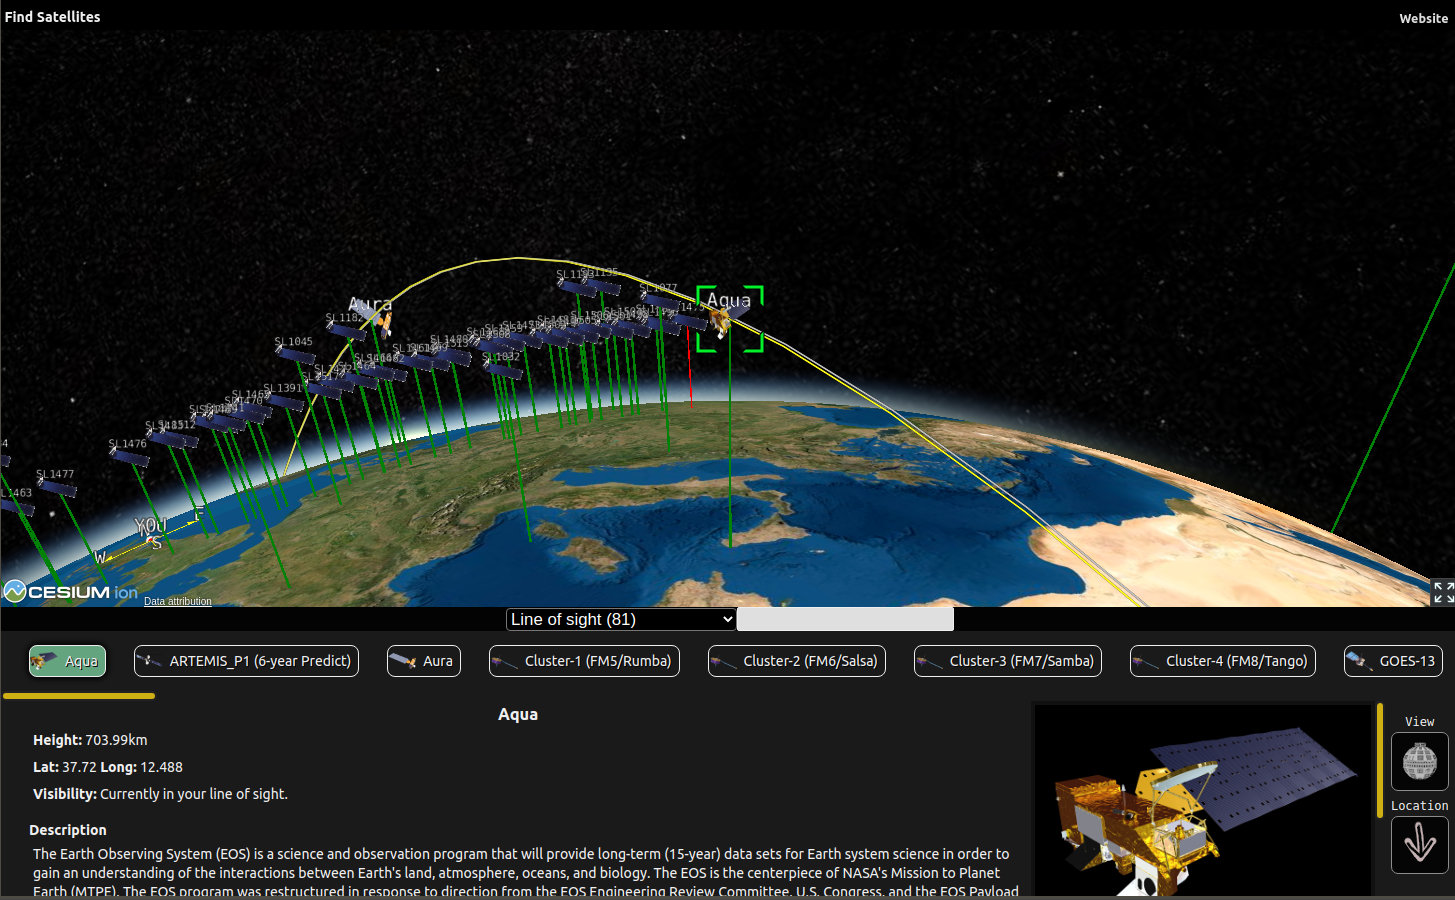 Find Satellites screenshot with sunrise and Starlink satellites